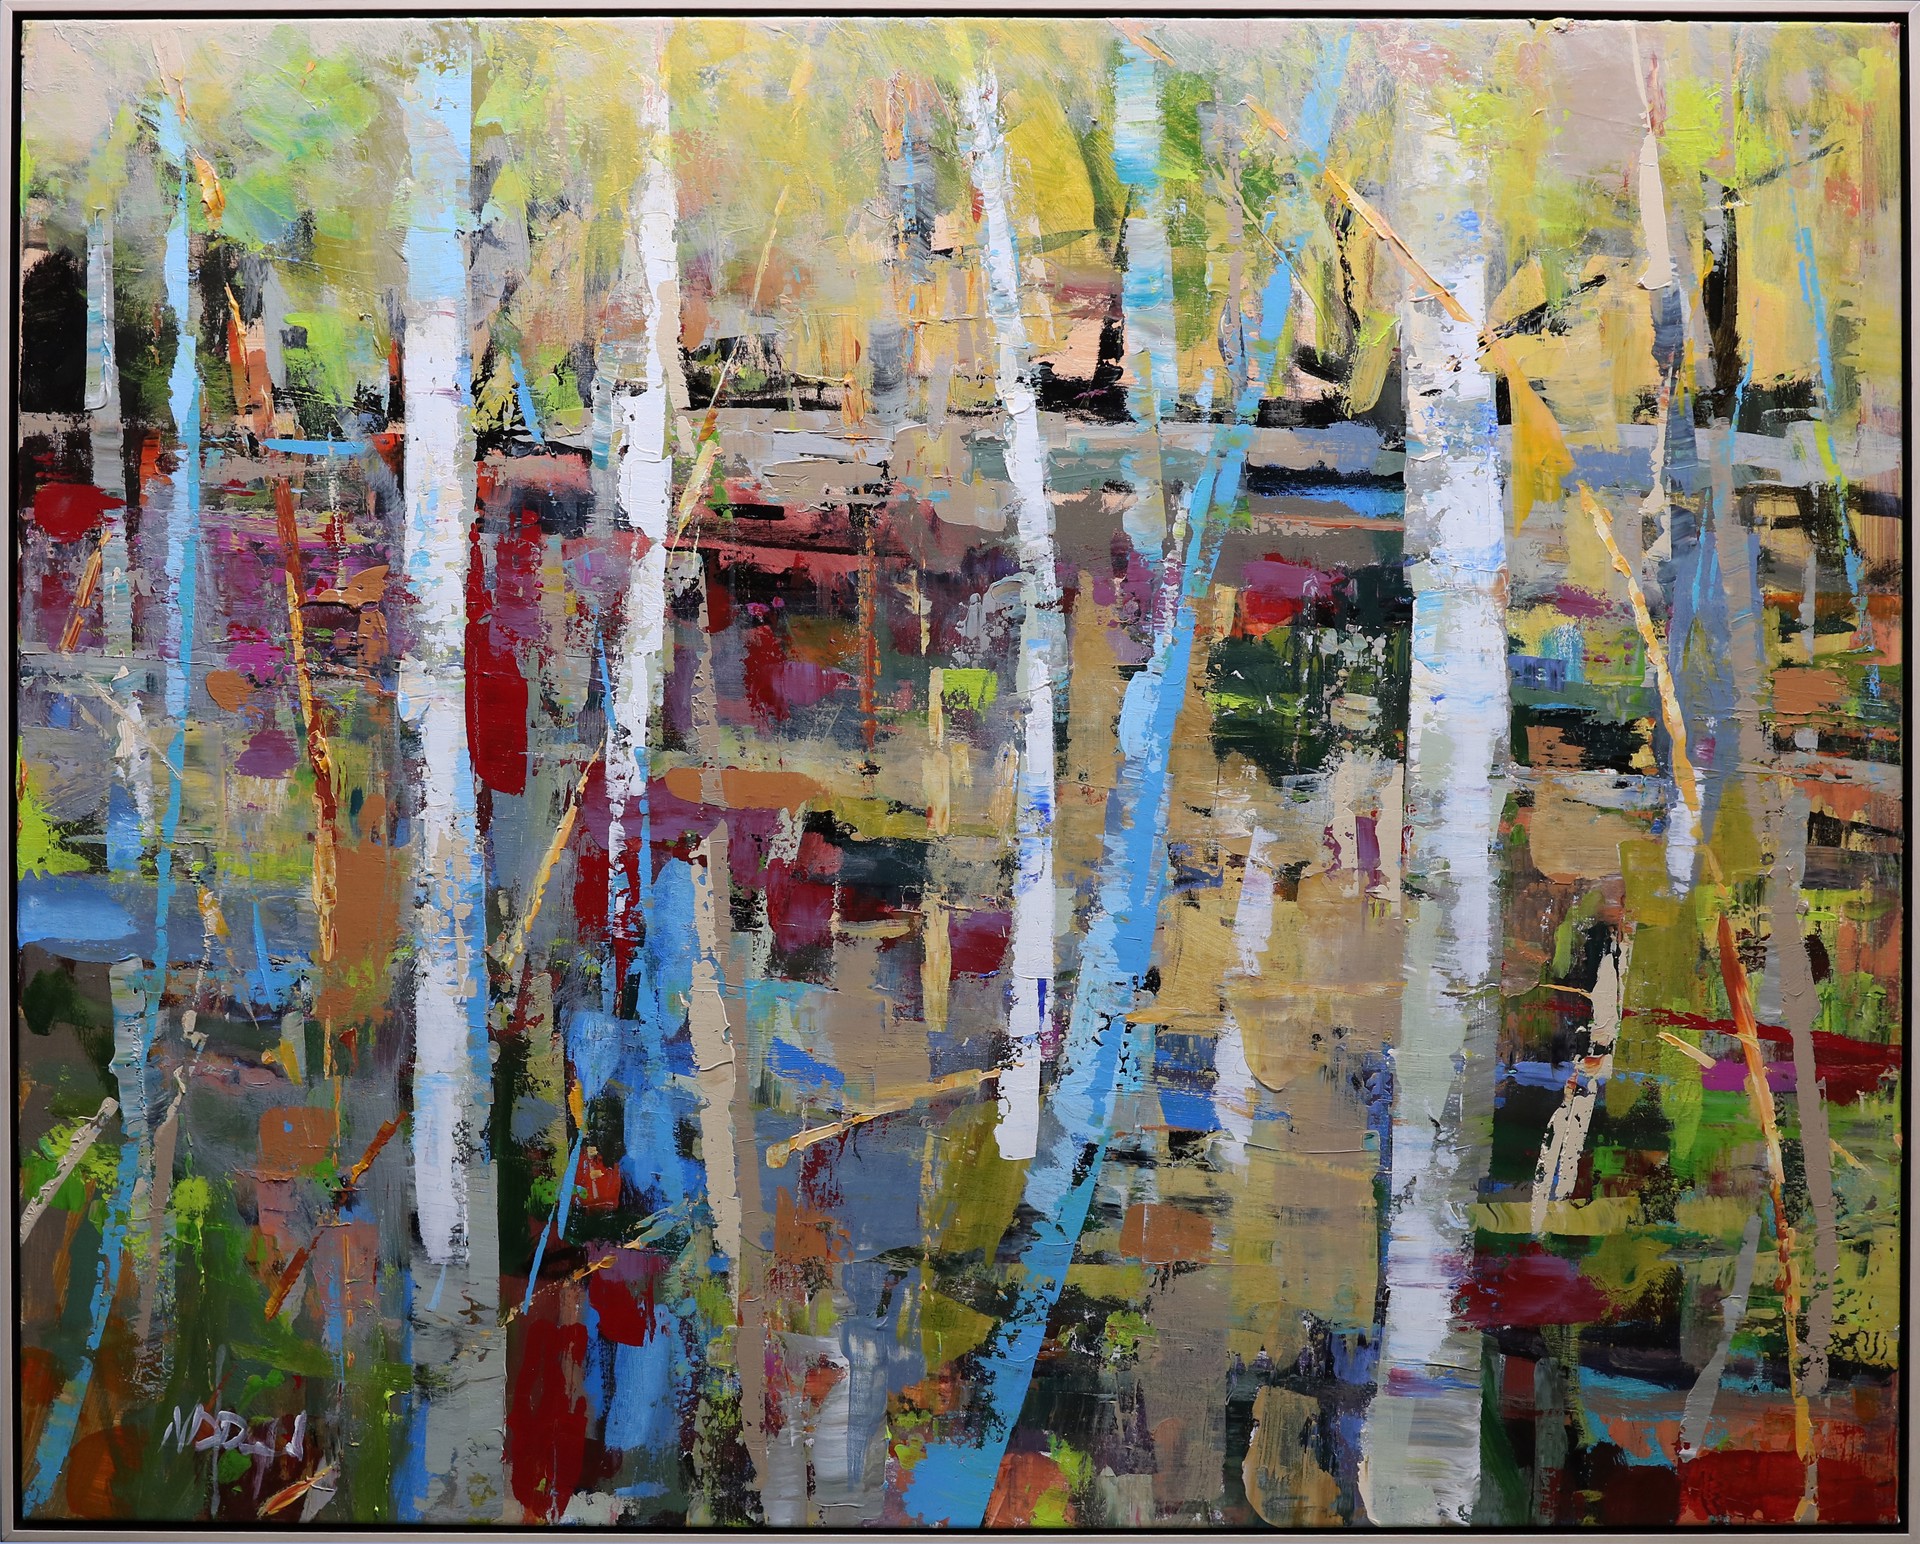 "Through the Trees" original oil painting by Noah Desmond